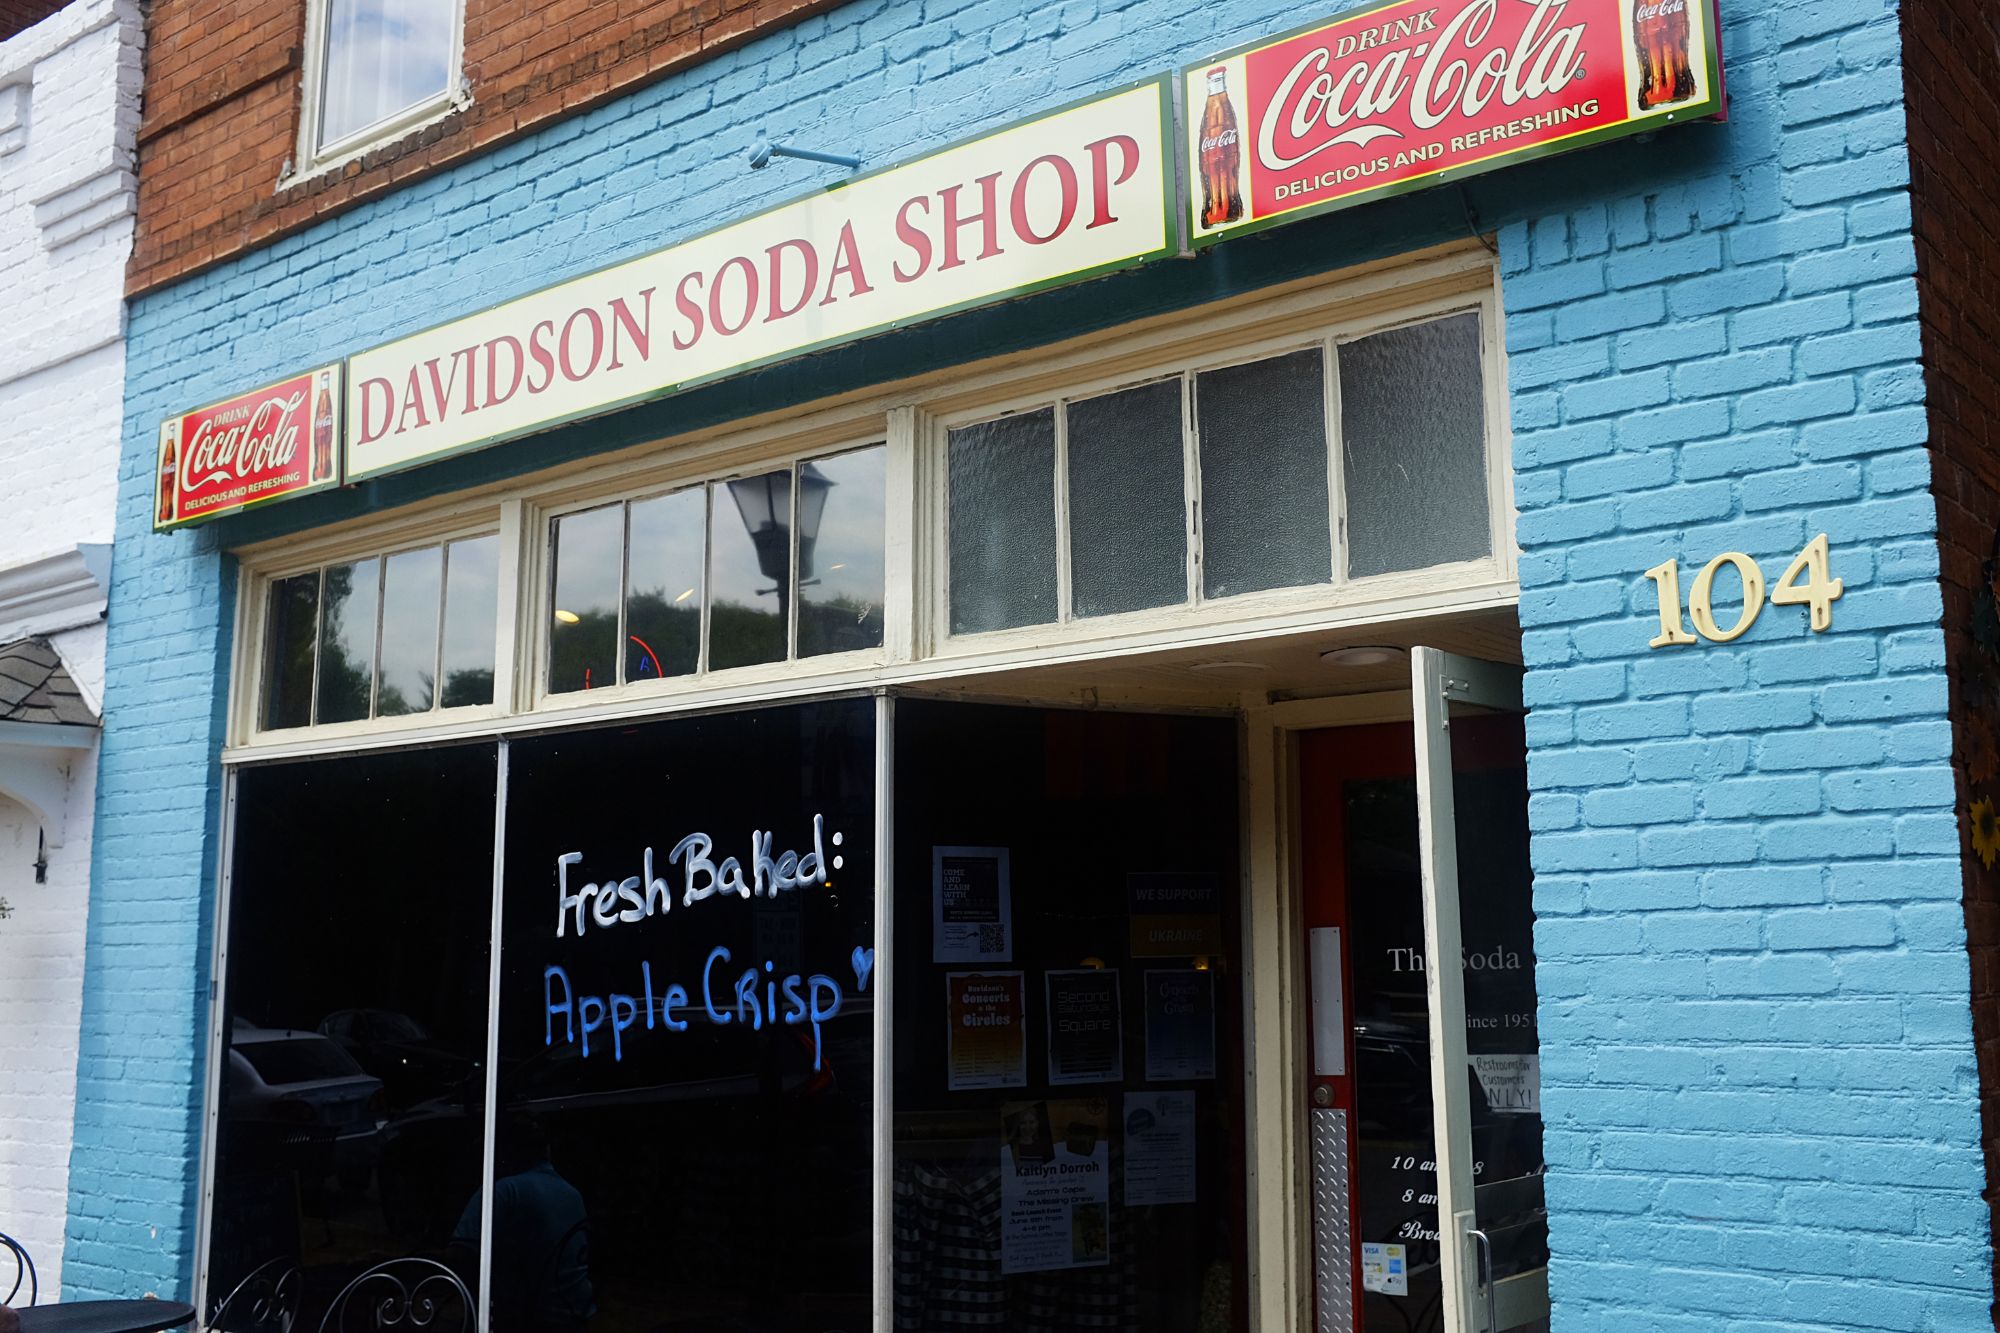 The Davidson Soda Shop